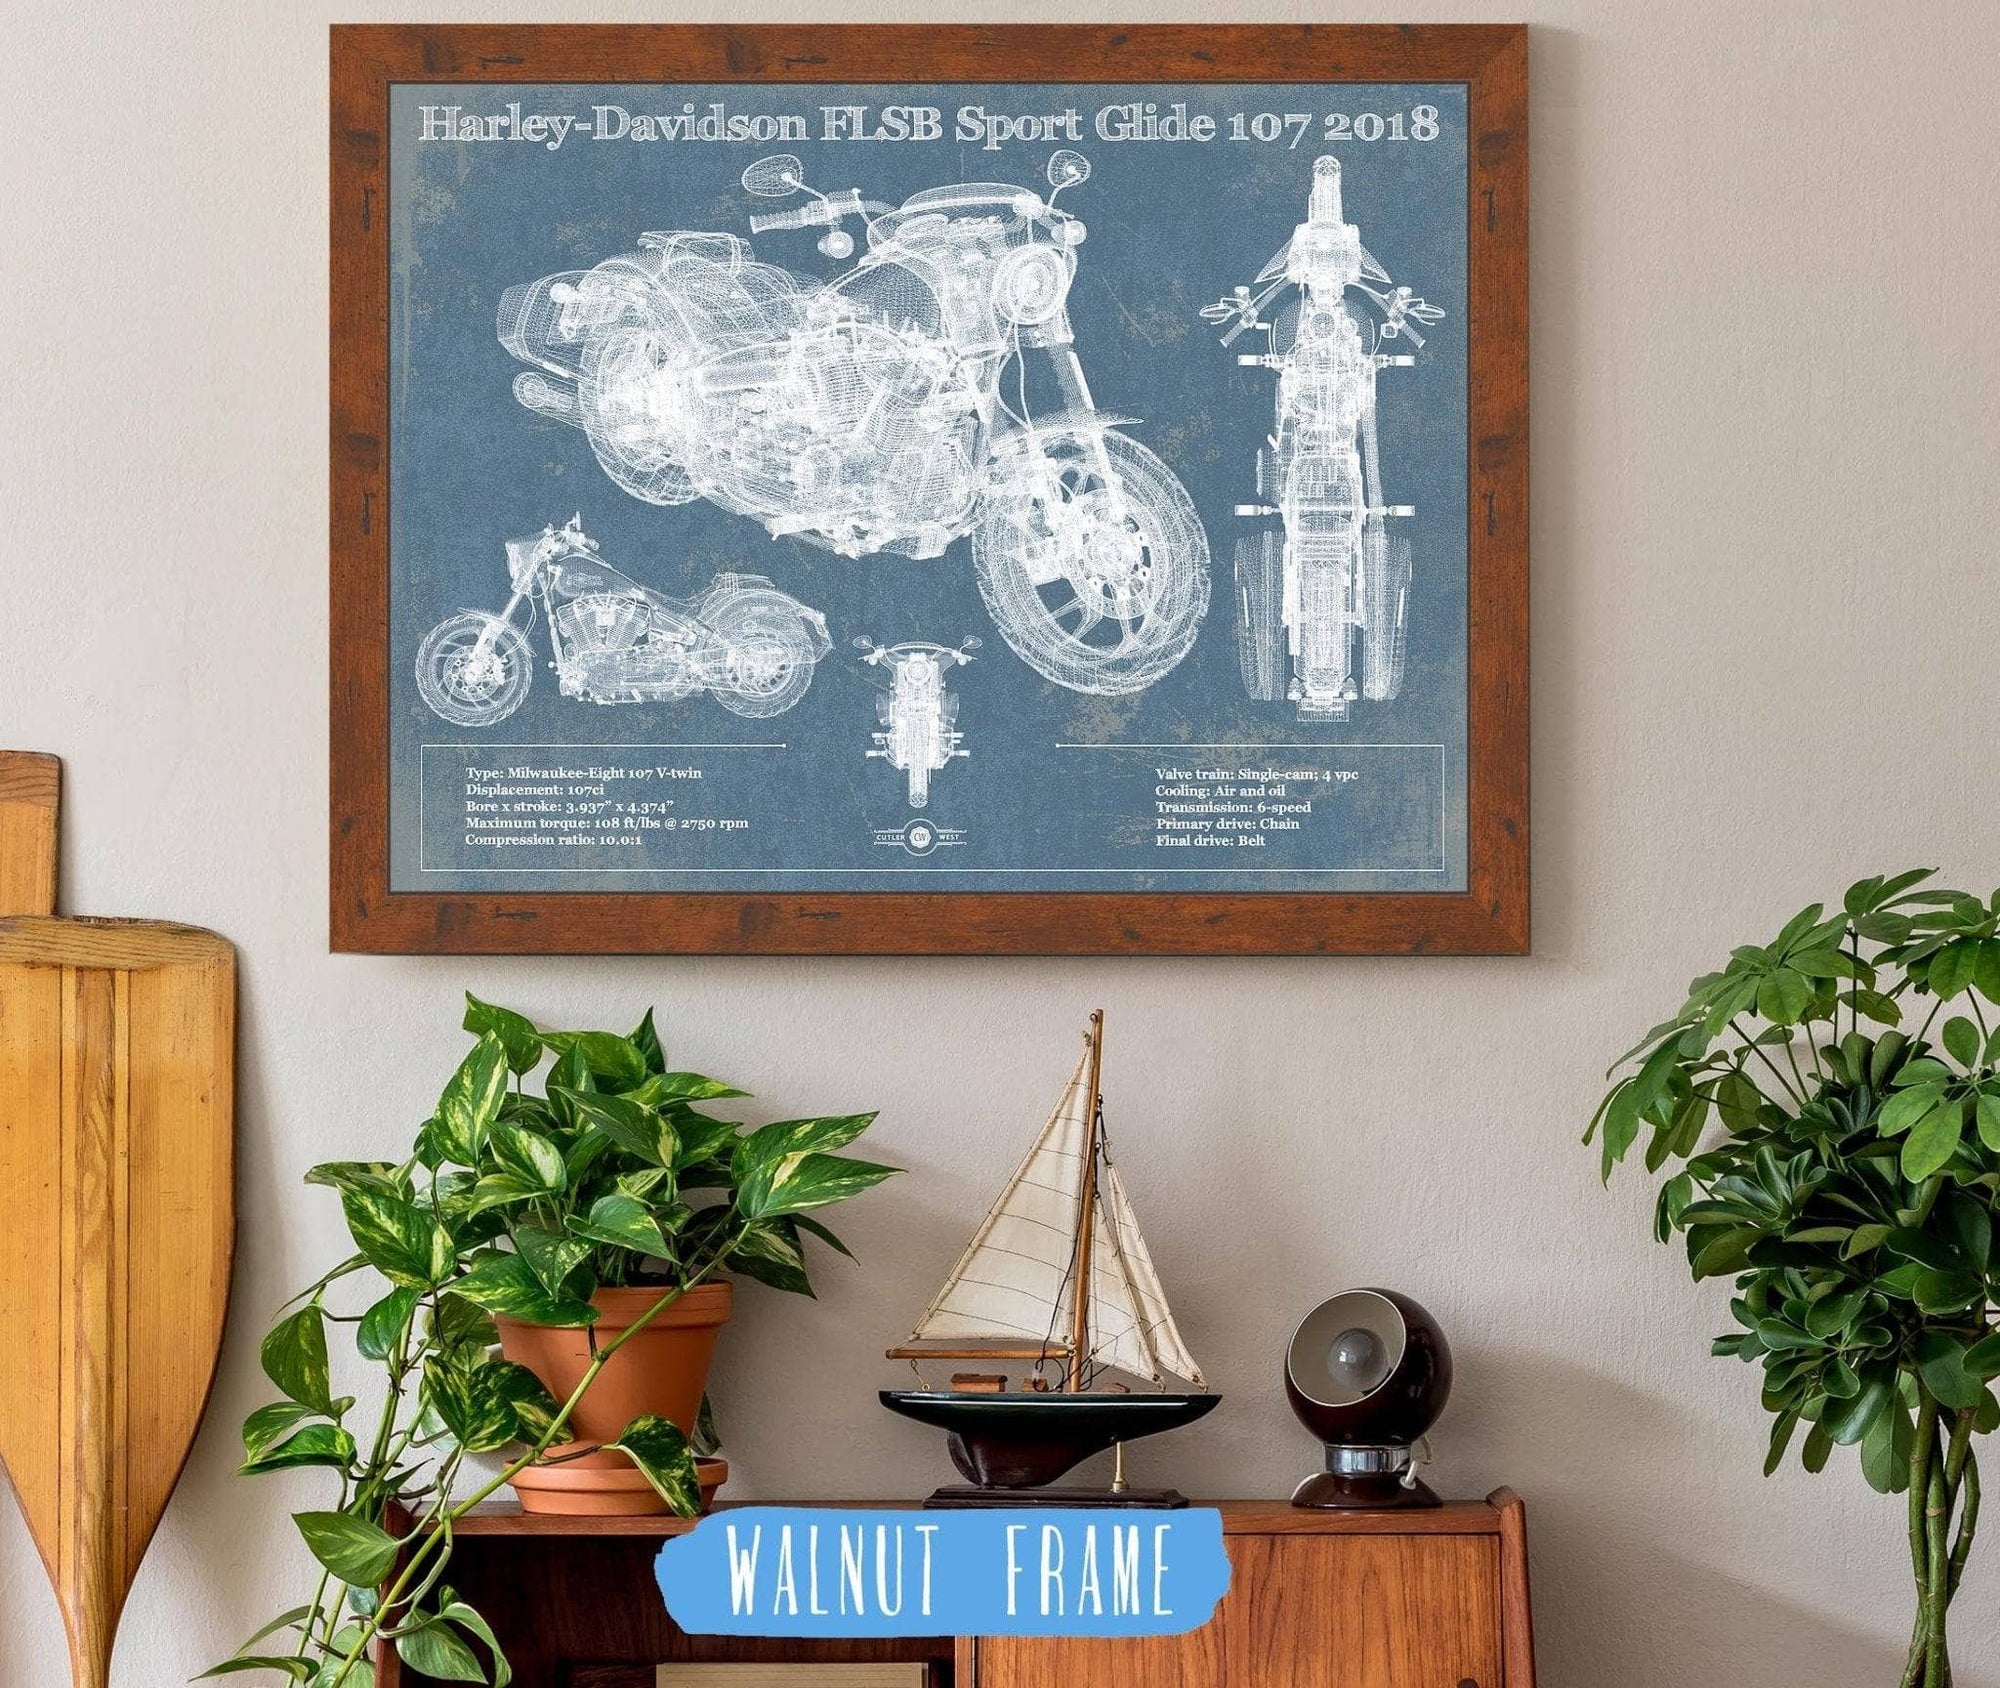 Cutler West 14" x 11" / Walnut Frame Harley-Davidson FLSB Sport Glide 107 2018 Blueprint Motorcycle Patent Print 933452368_16823